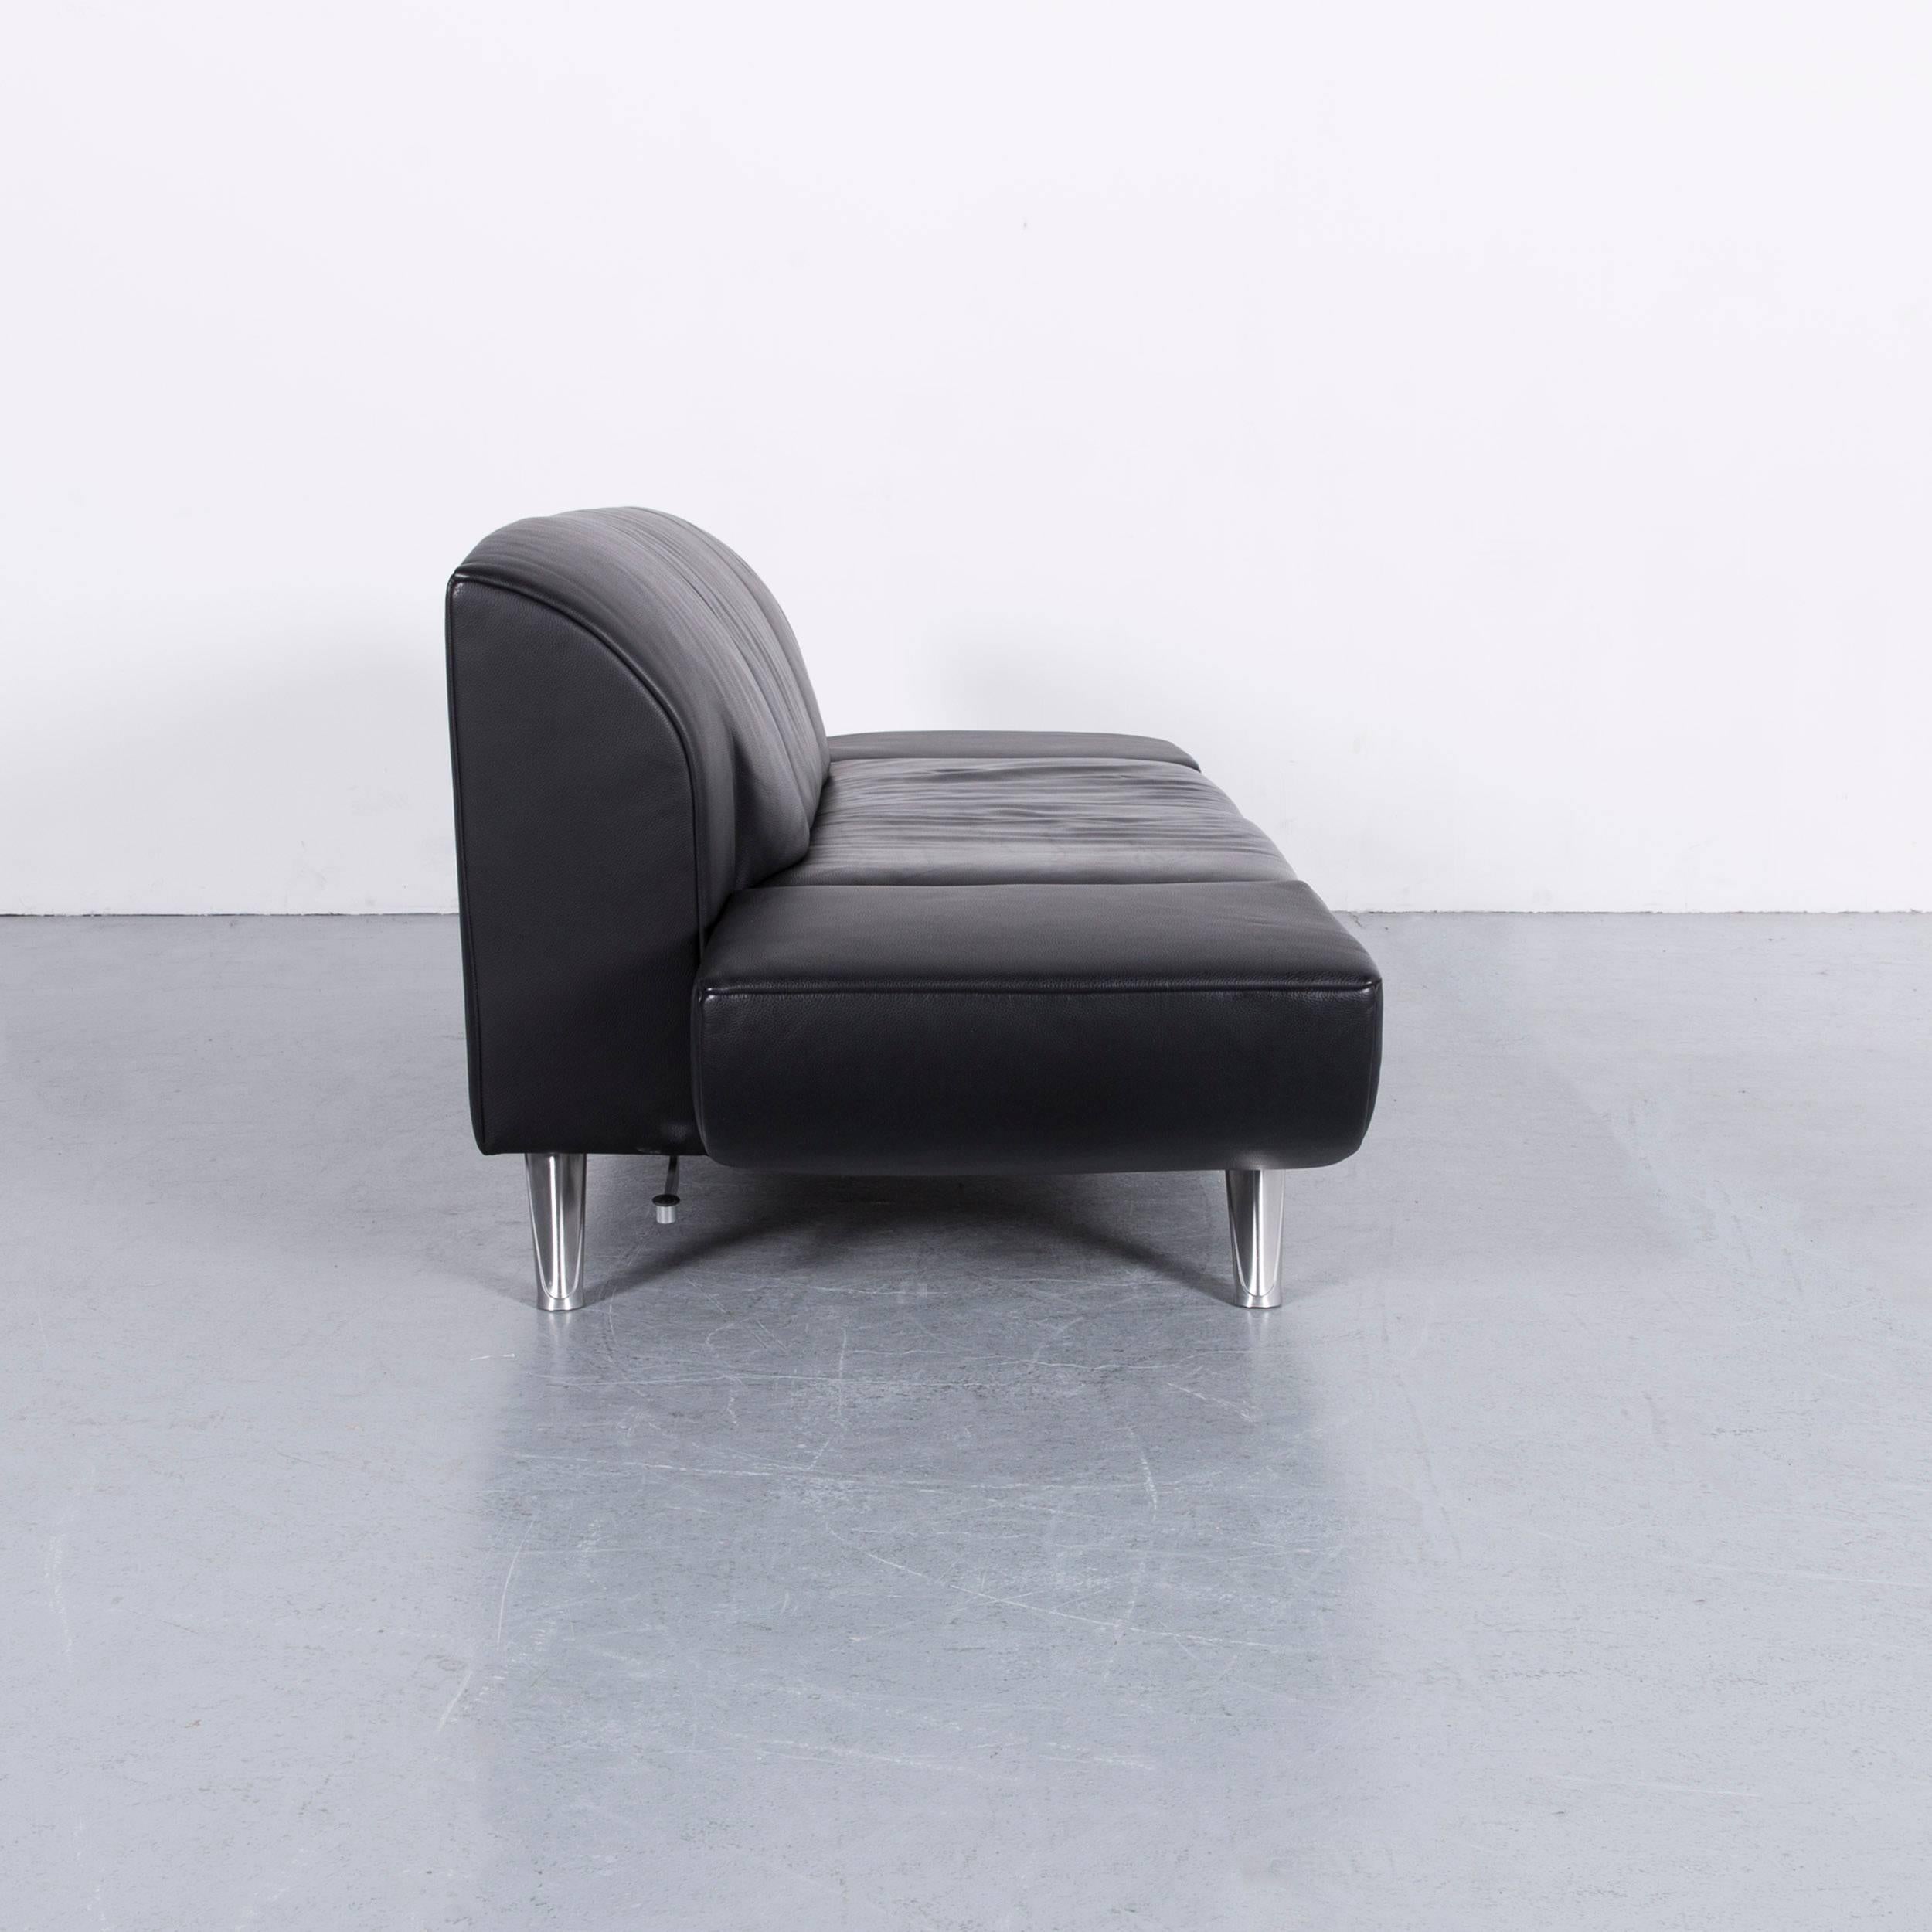 Jori JR 9700 Leather Sofa Black Three-Seat Couch 6